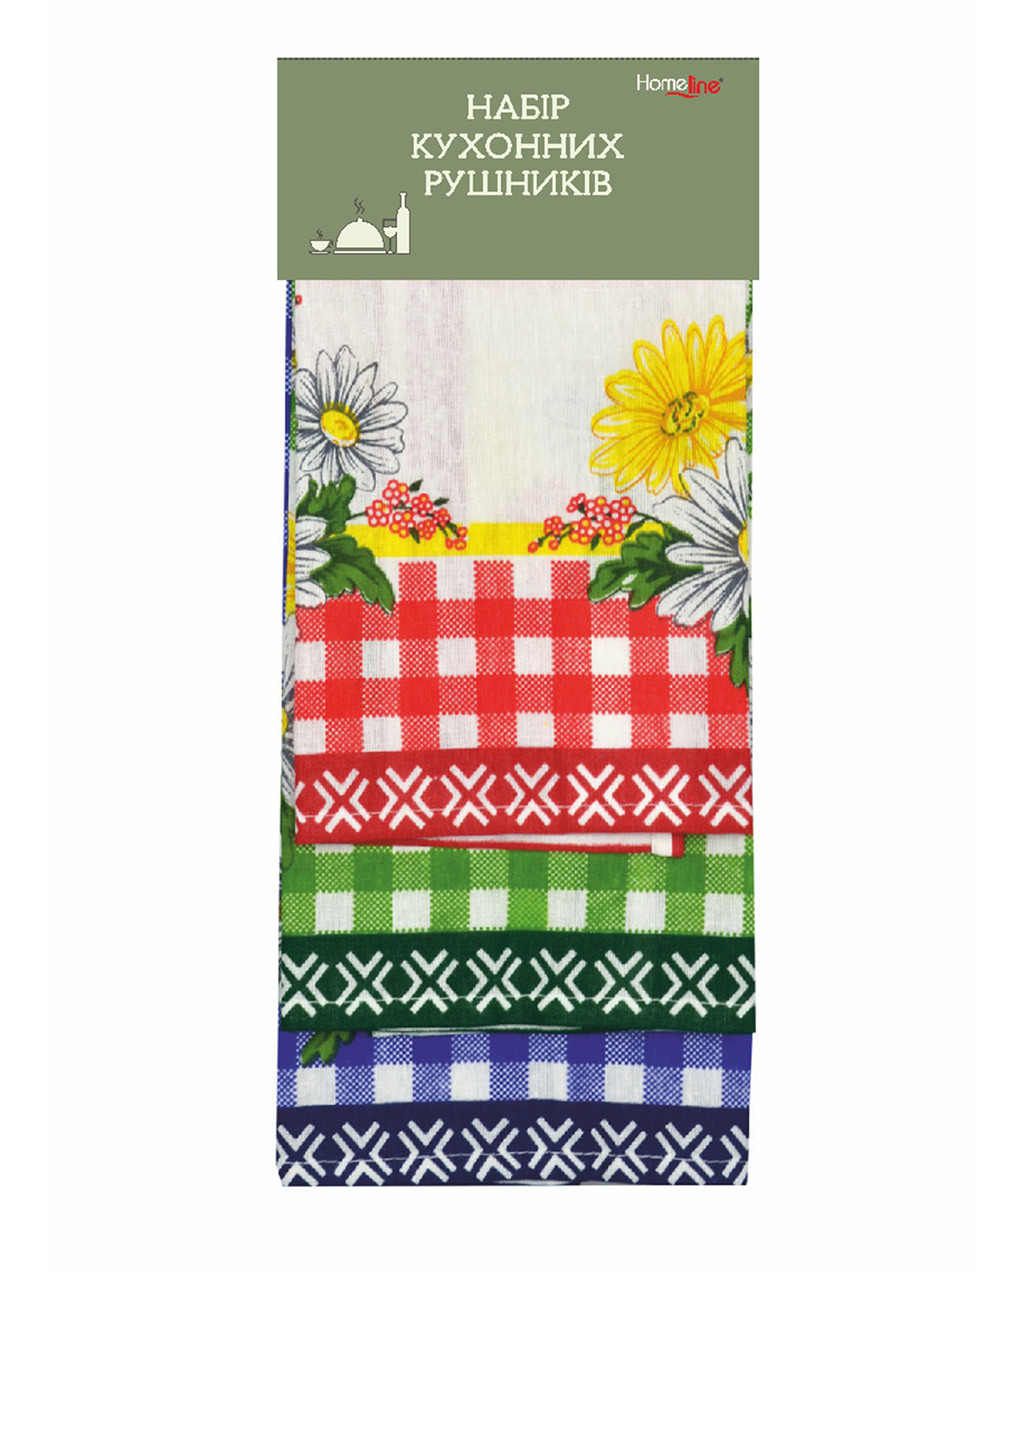 Home Line полотенце (3 шт.), 40х60 см рисунок комбинированный производство - Украина